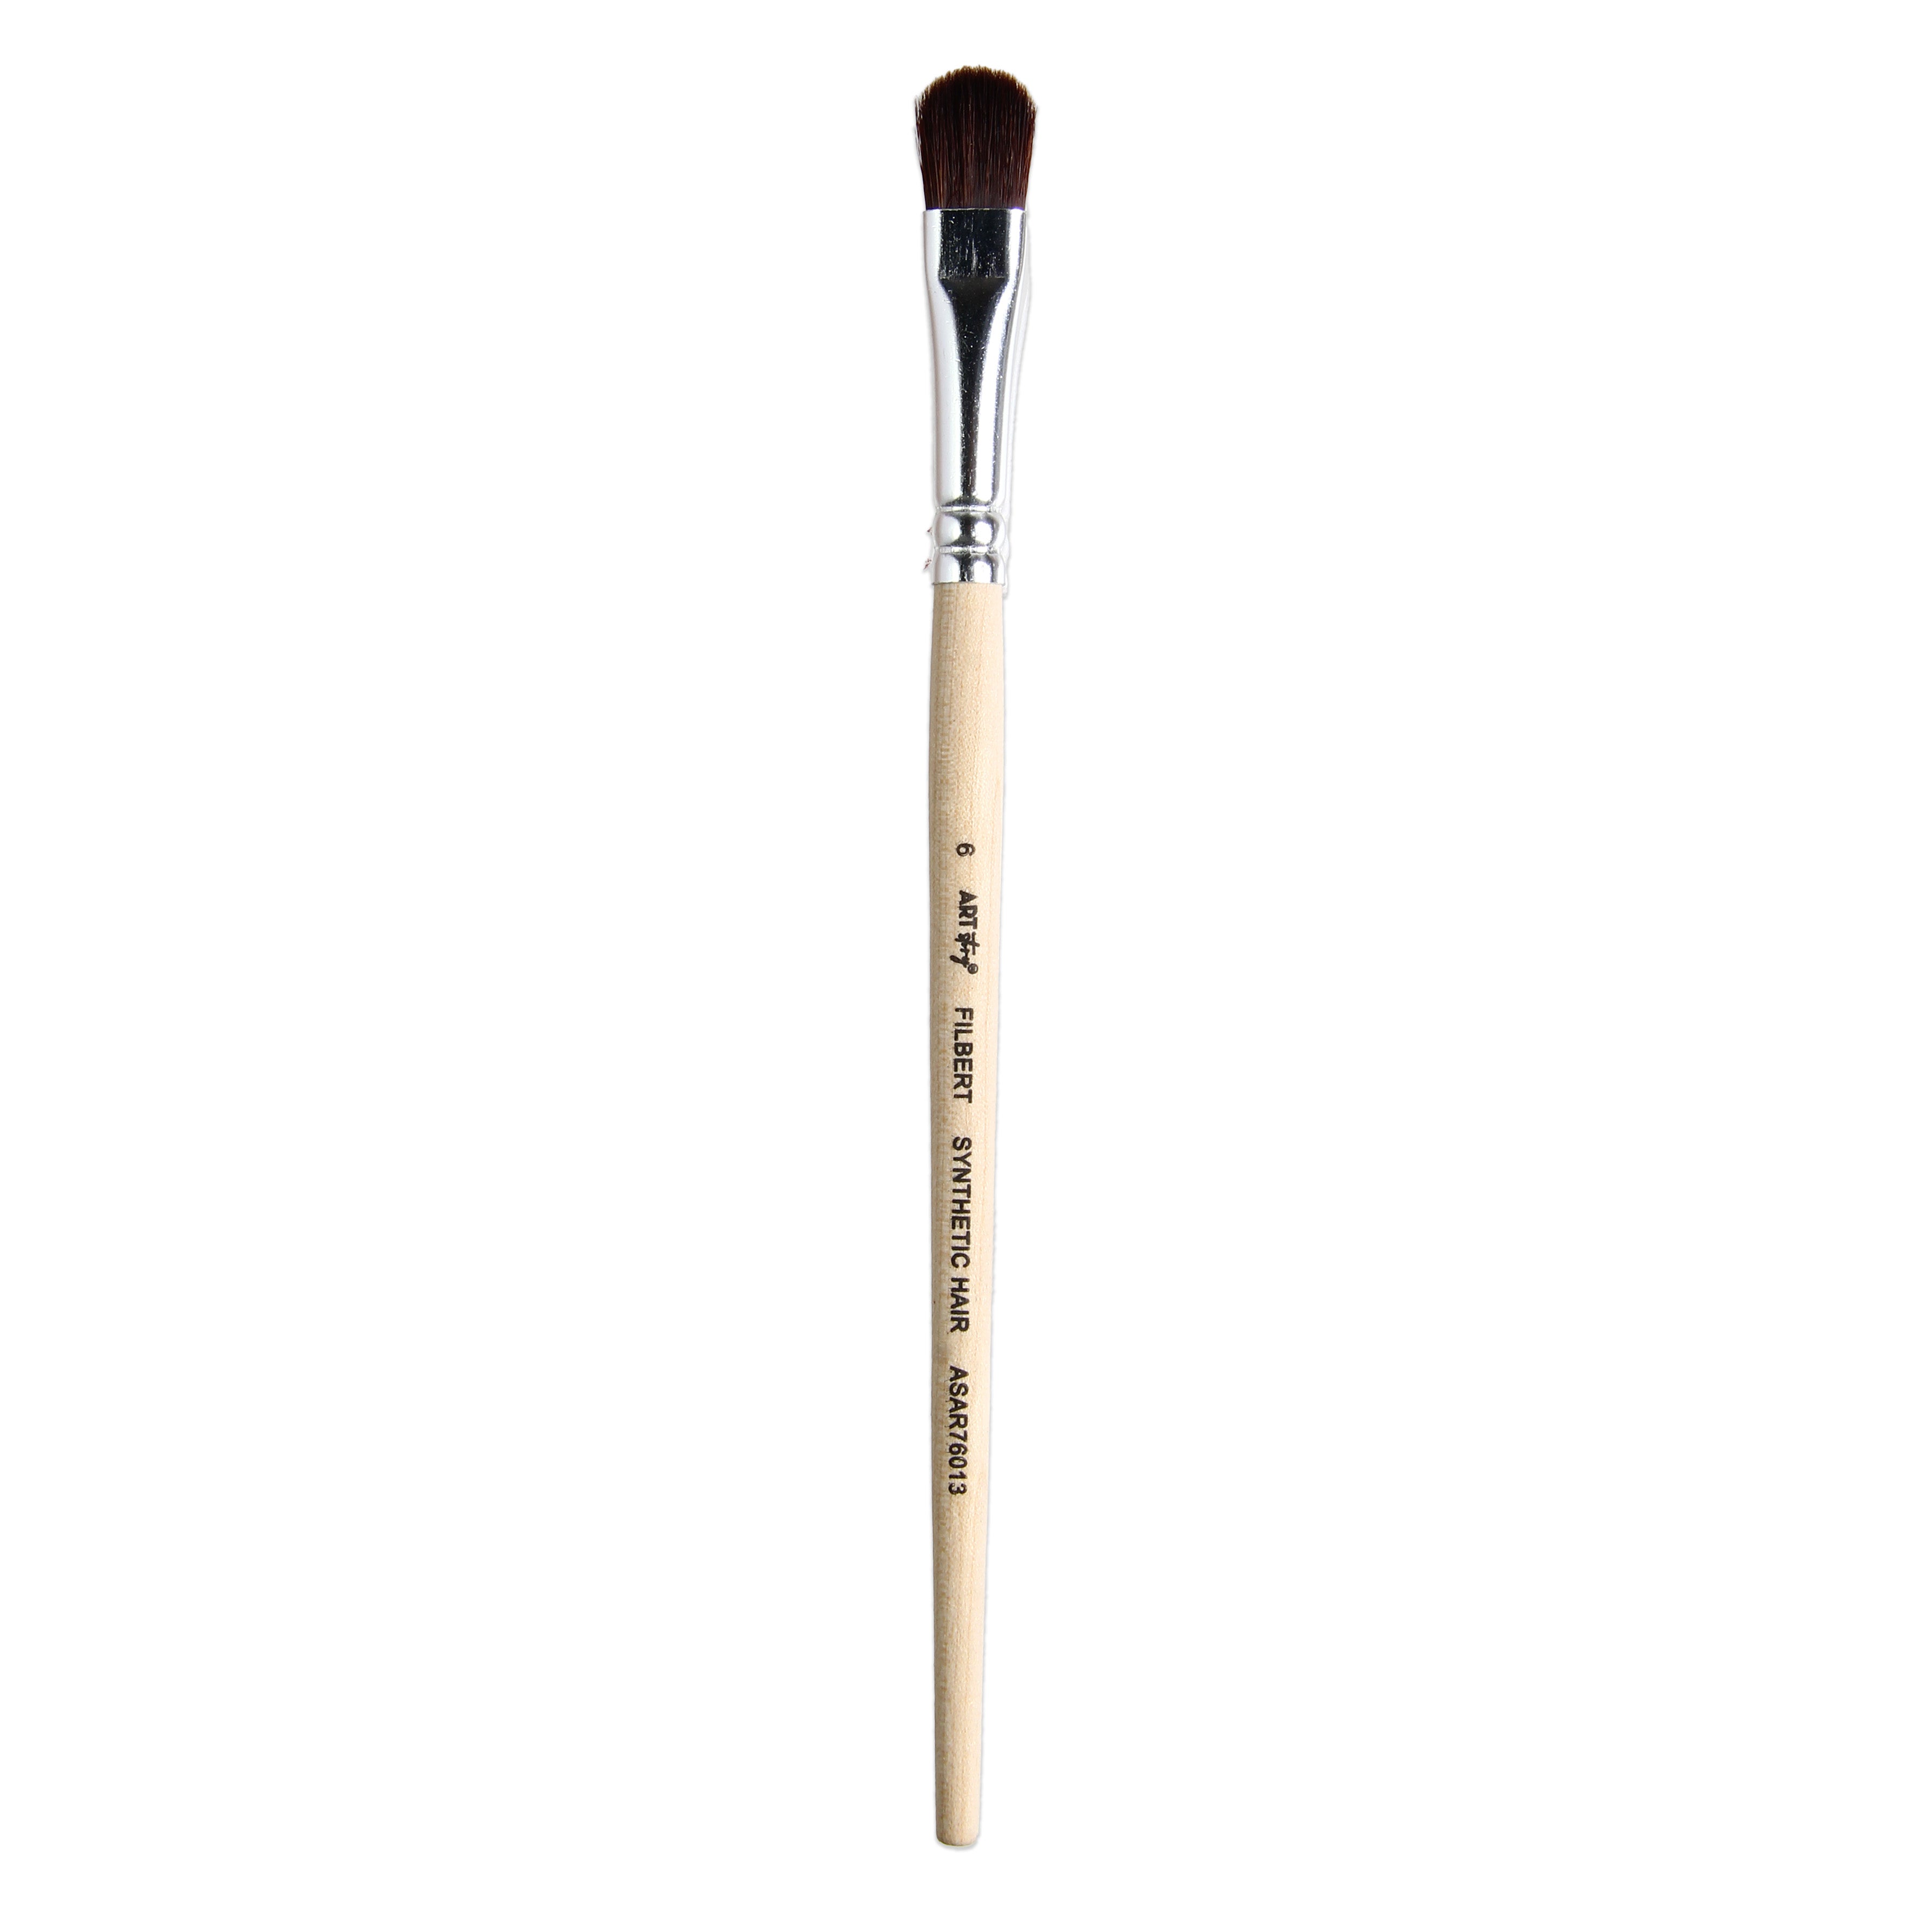 Watercolour Filbert Brush (6) 165mm